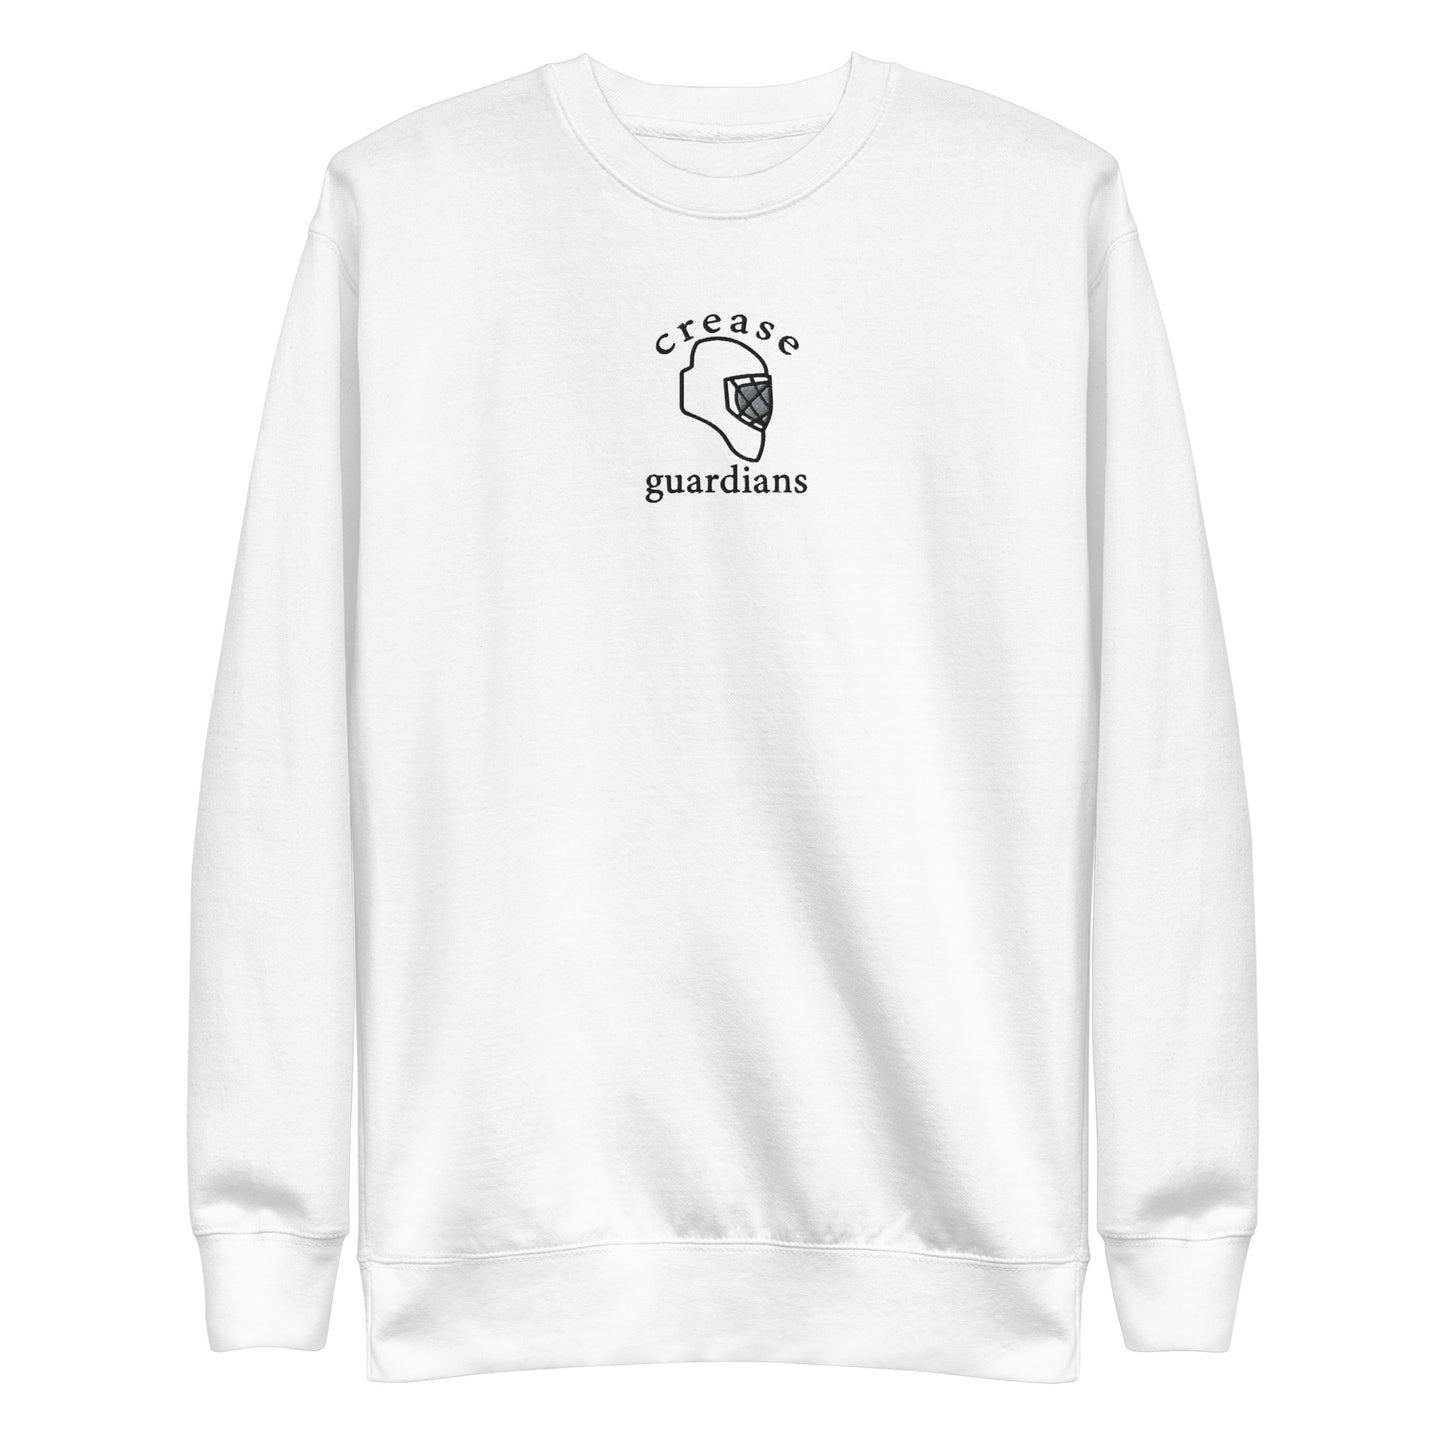 Embroidered Logo Unisex Premium Sweatshirt - Light